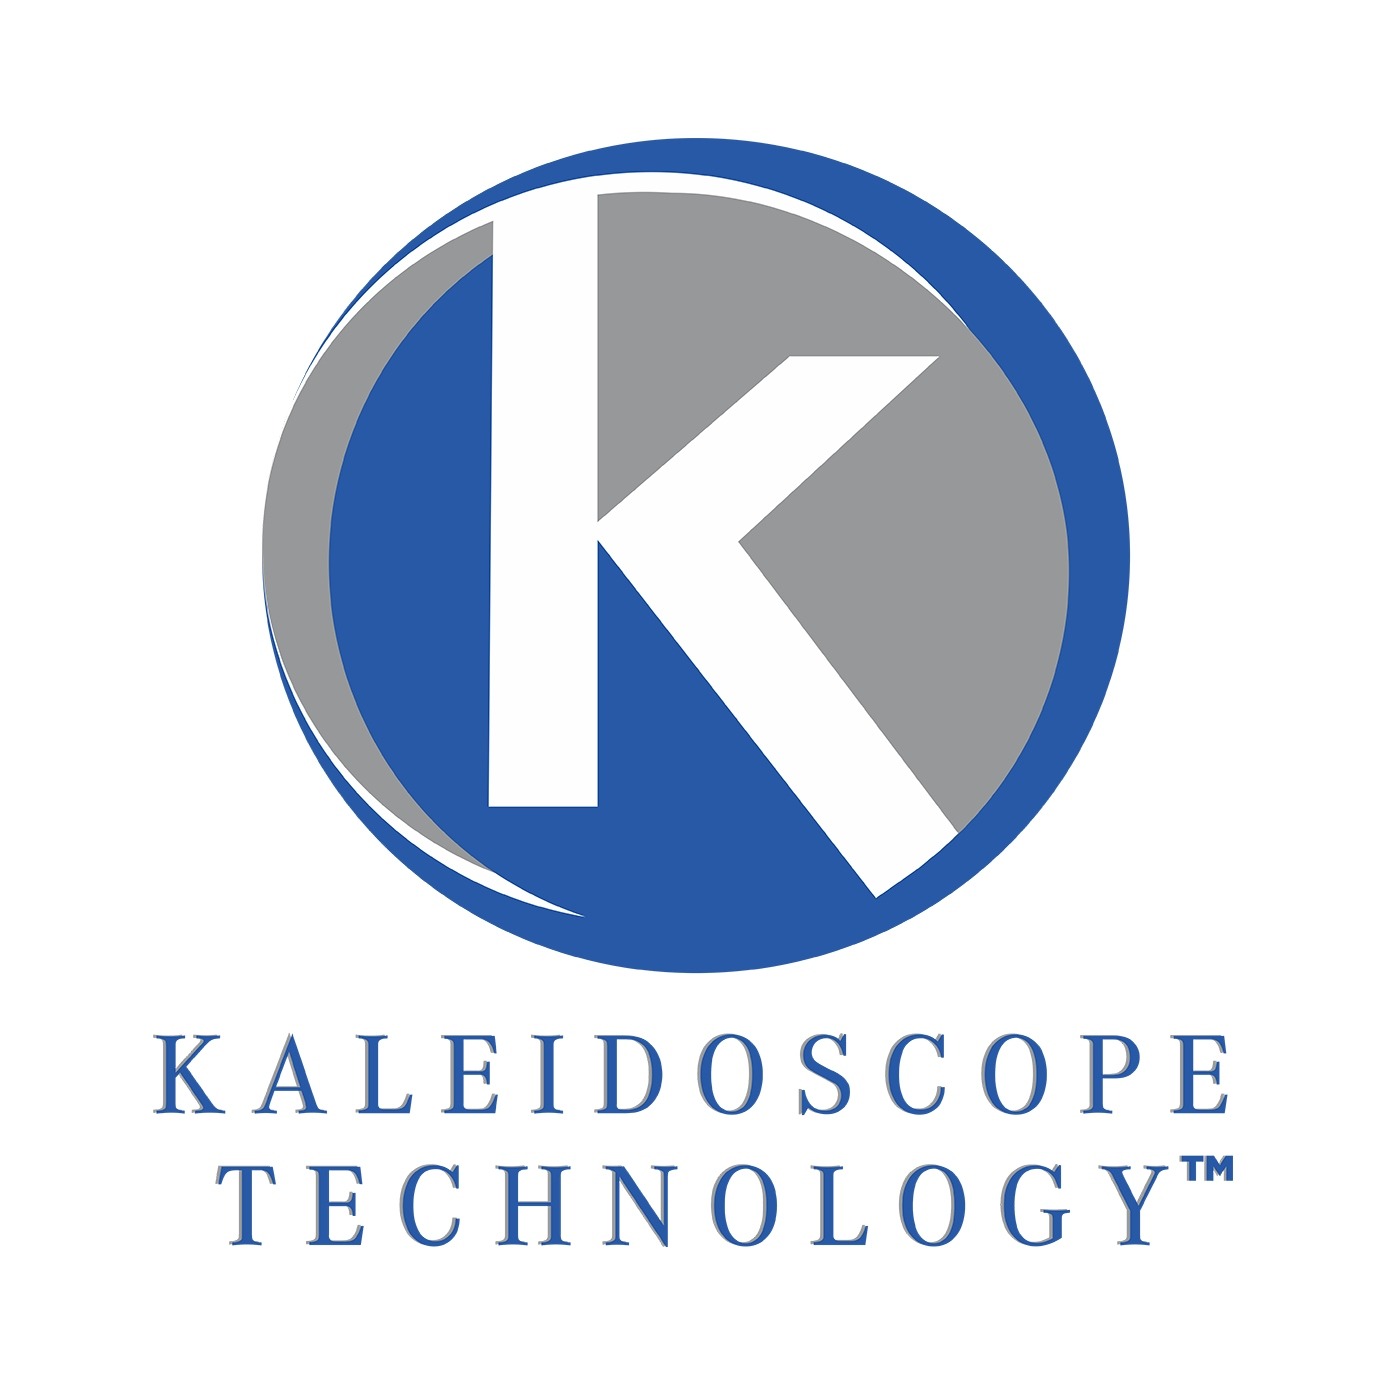 Kaleidoscope Technology